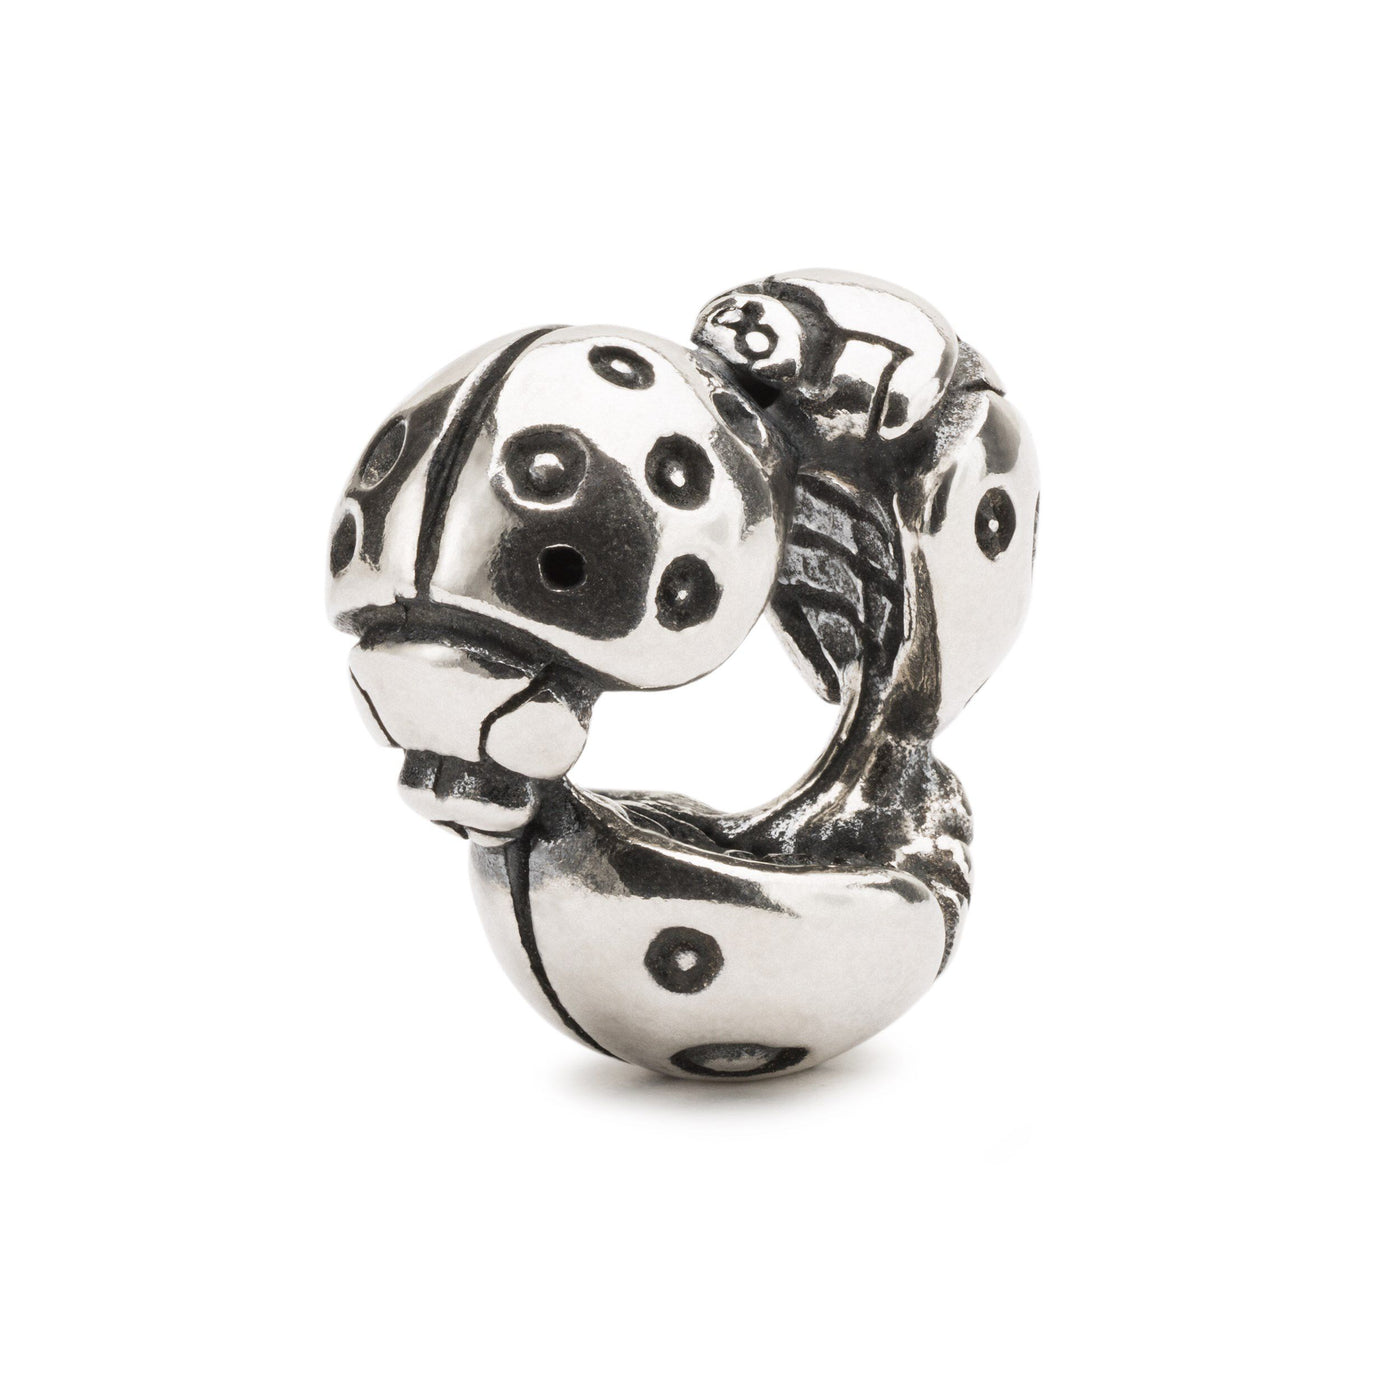  Three Ladybugs form a silver jewellery bead.